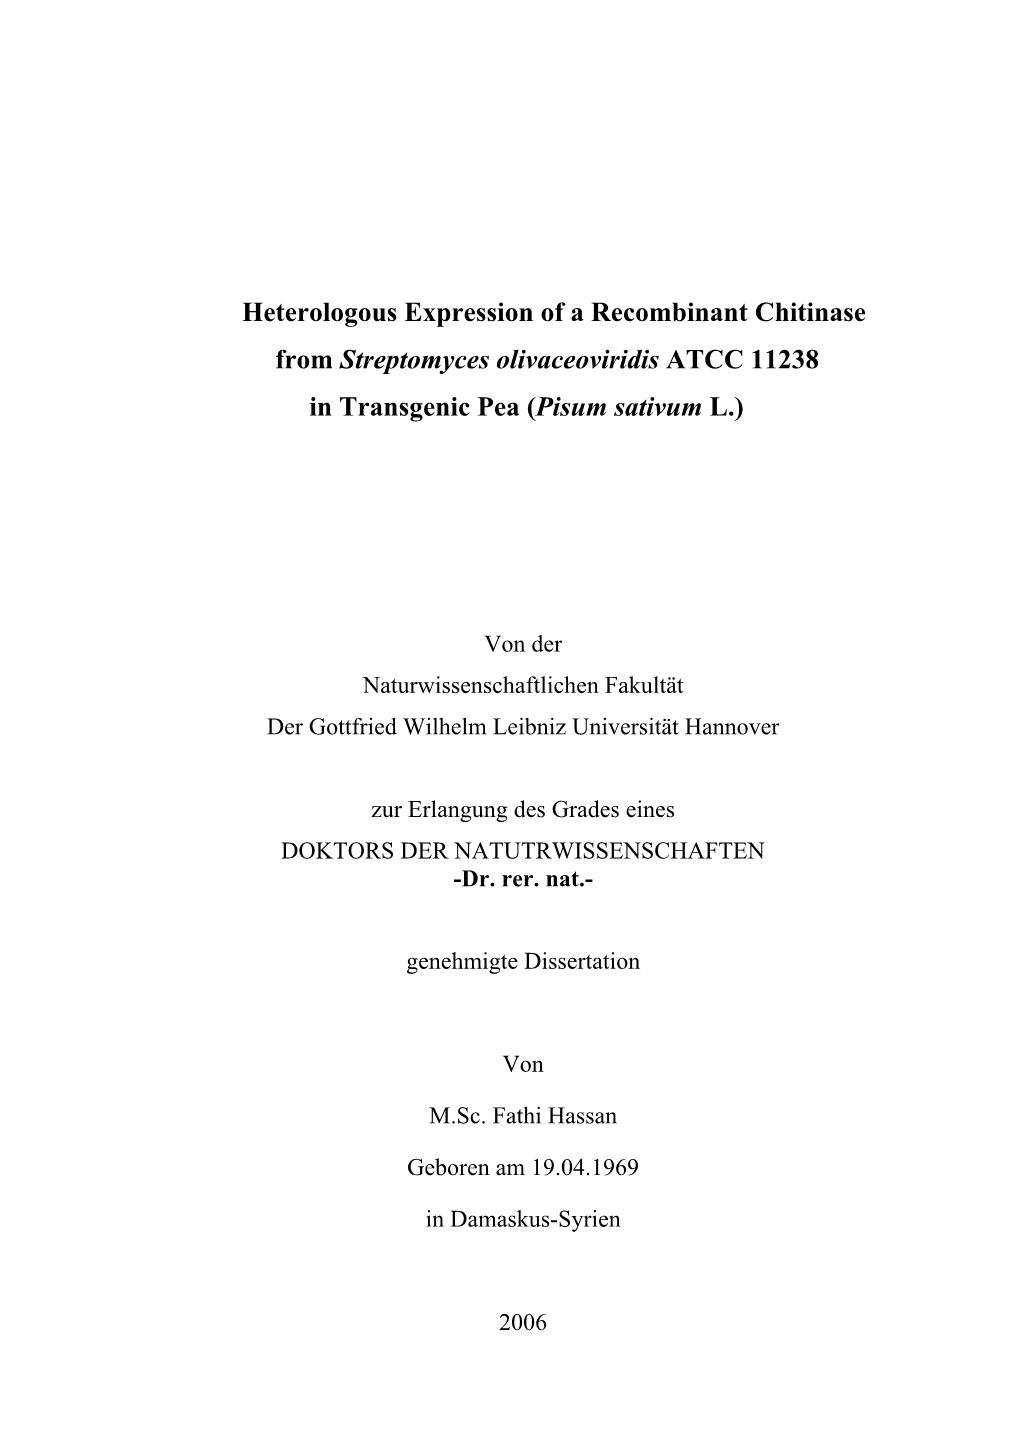 Heterologous Expression of a Recombinant Chitinase from Streptomyces Olivaceoviridis ATCC 11238 in Transgenic Pea (Pisum Sativum L.)